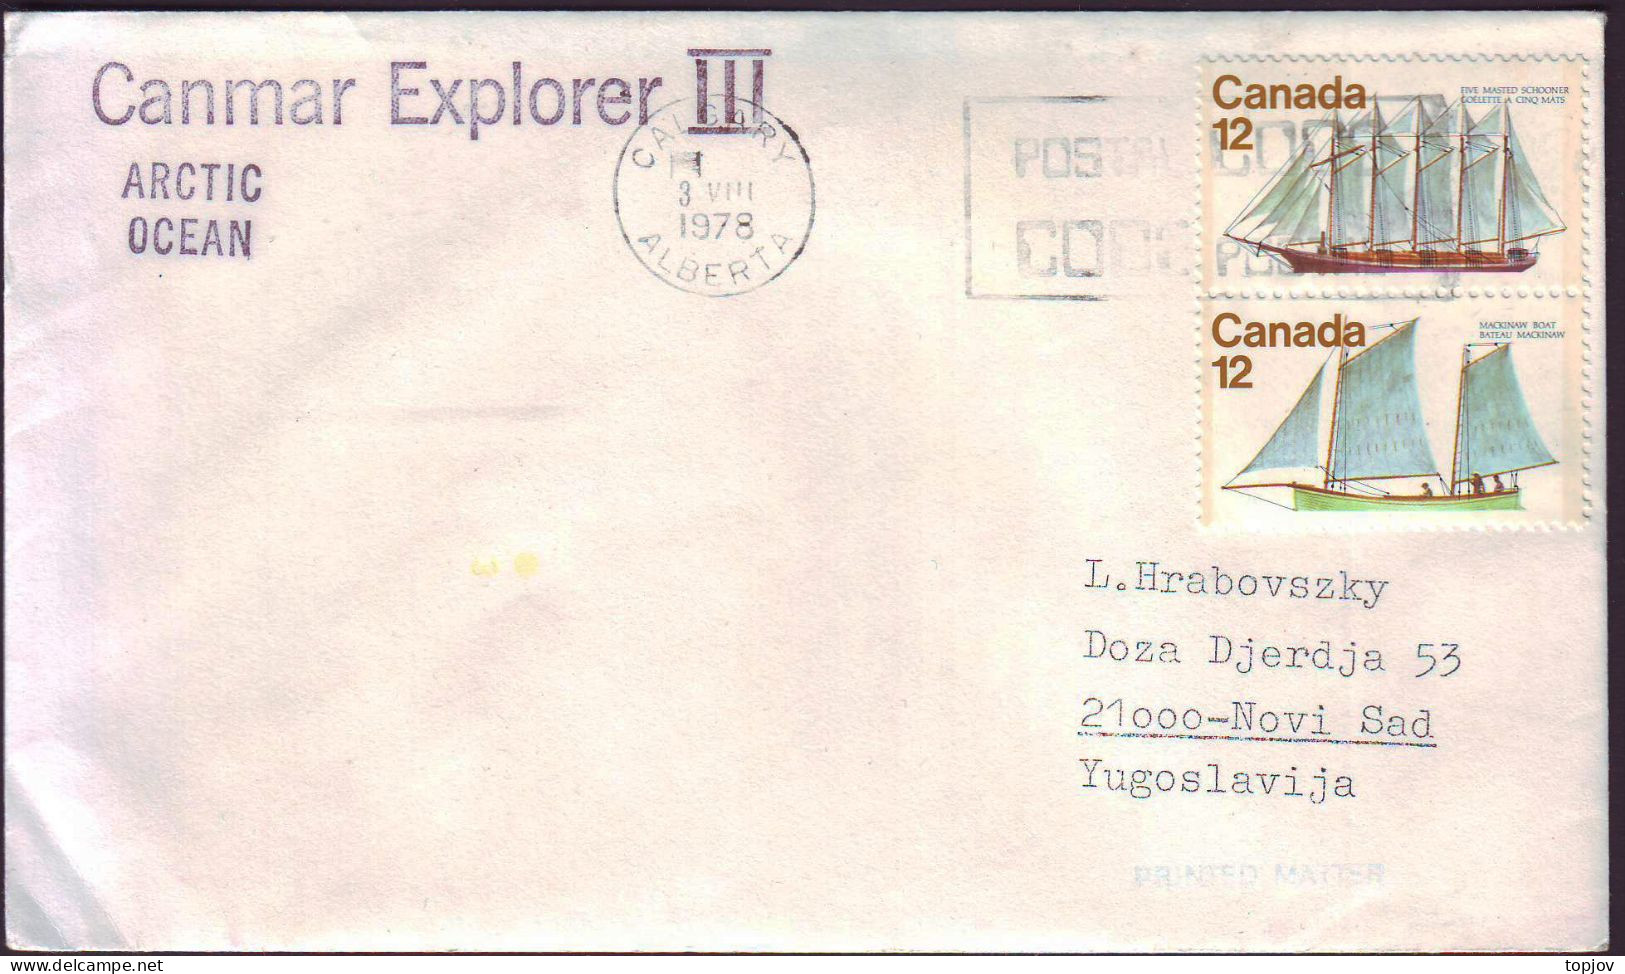 CANADA - CANMAR  EXPLORER  III  IN ARCTIC OCEAN - 1978 - Expéditions Arctiques